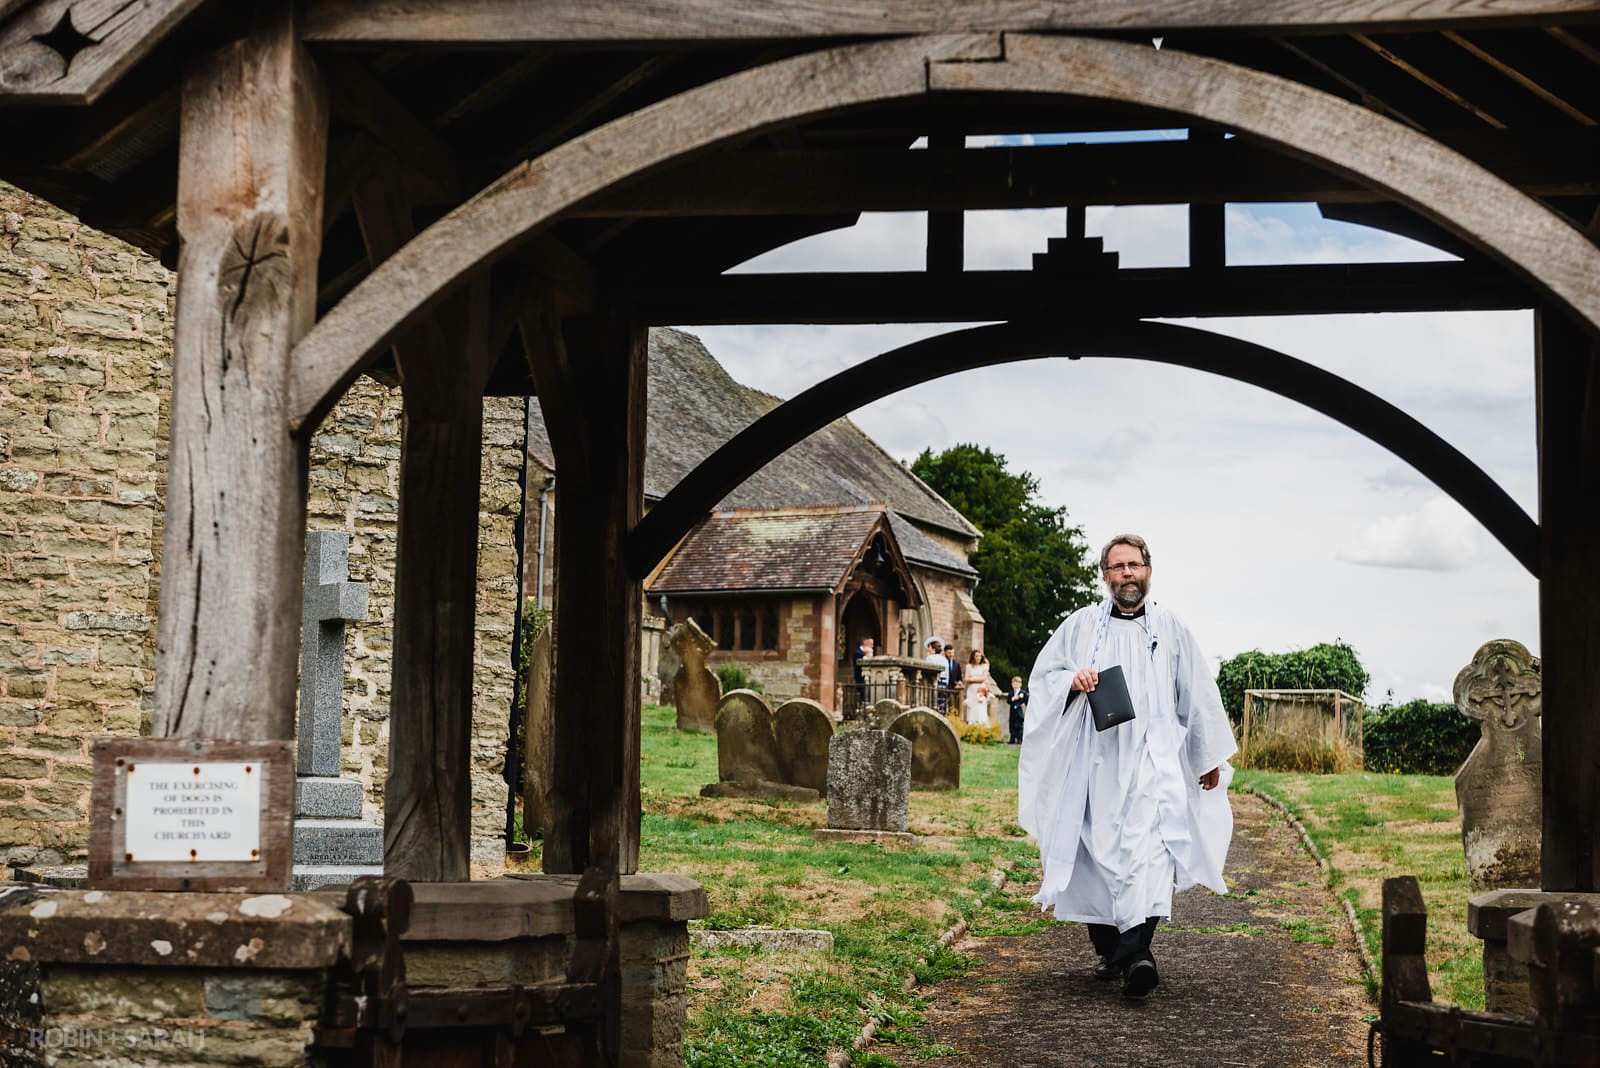 Vicar walks along church path to greet bride